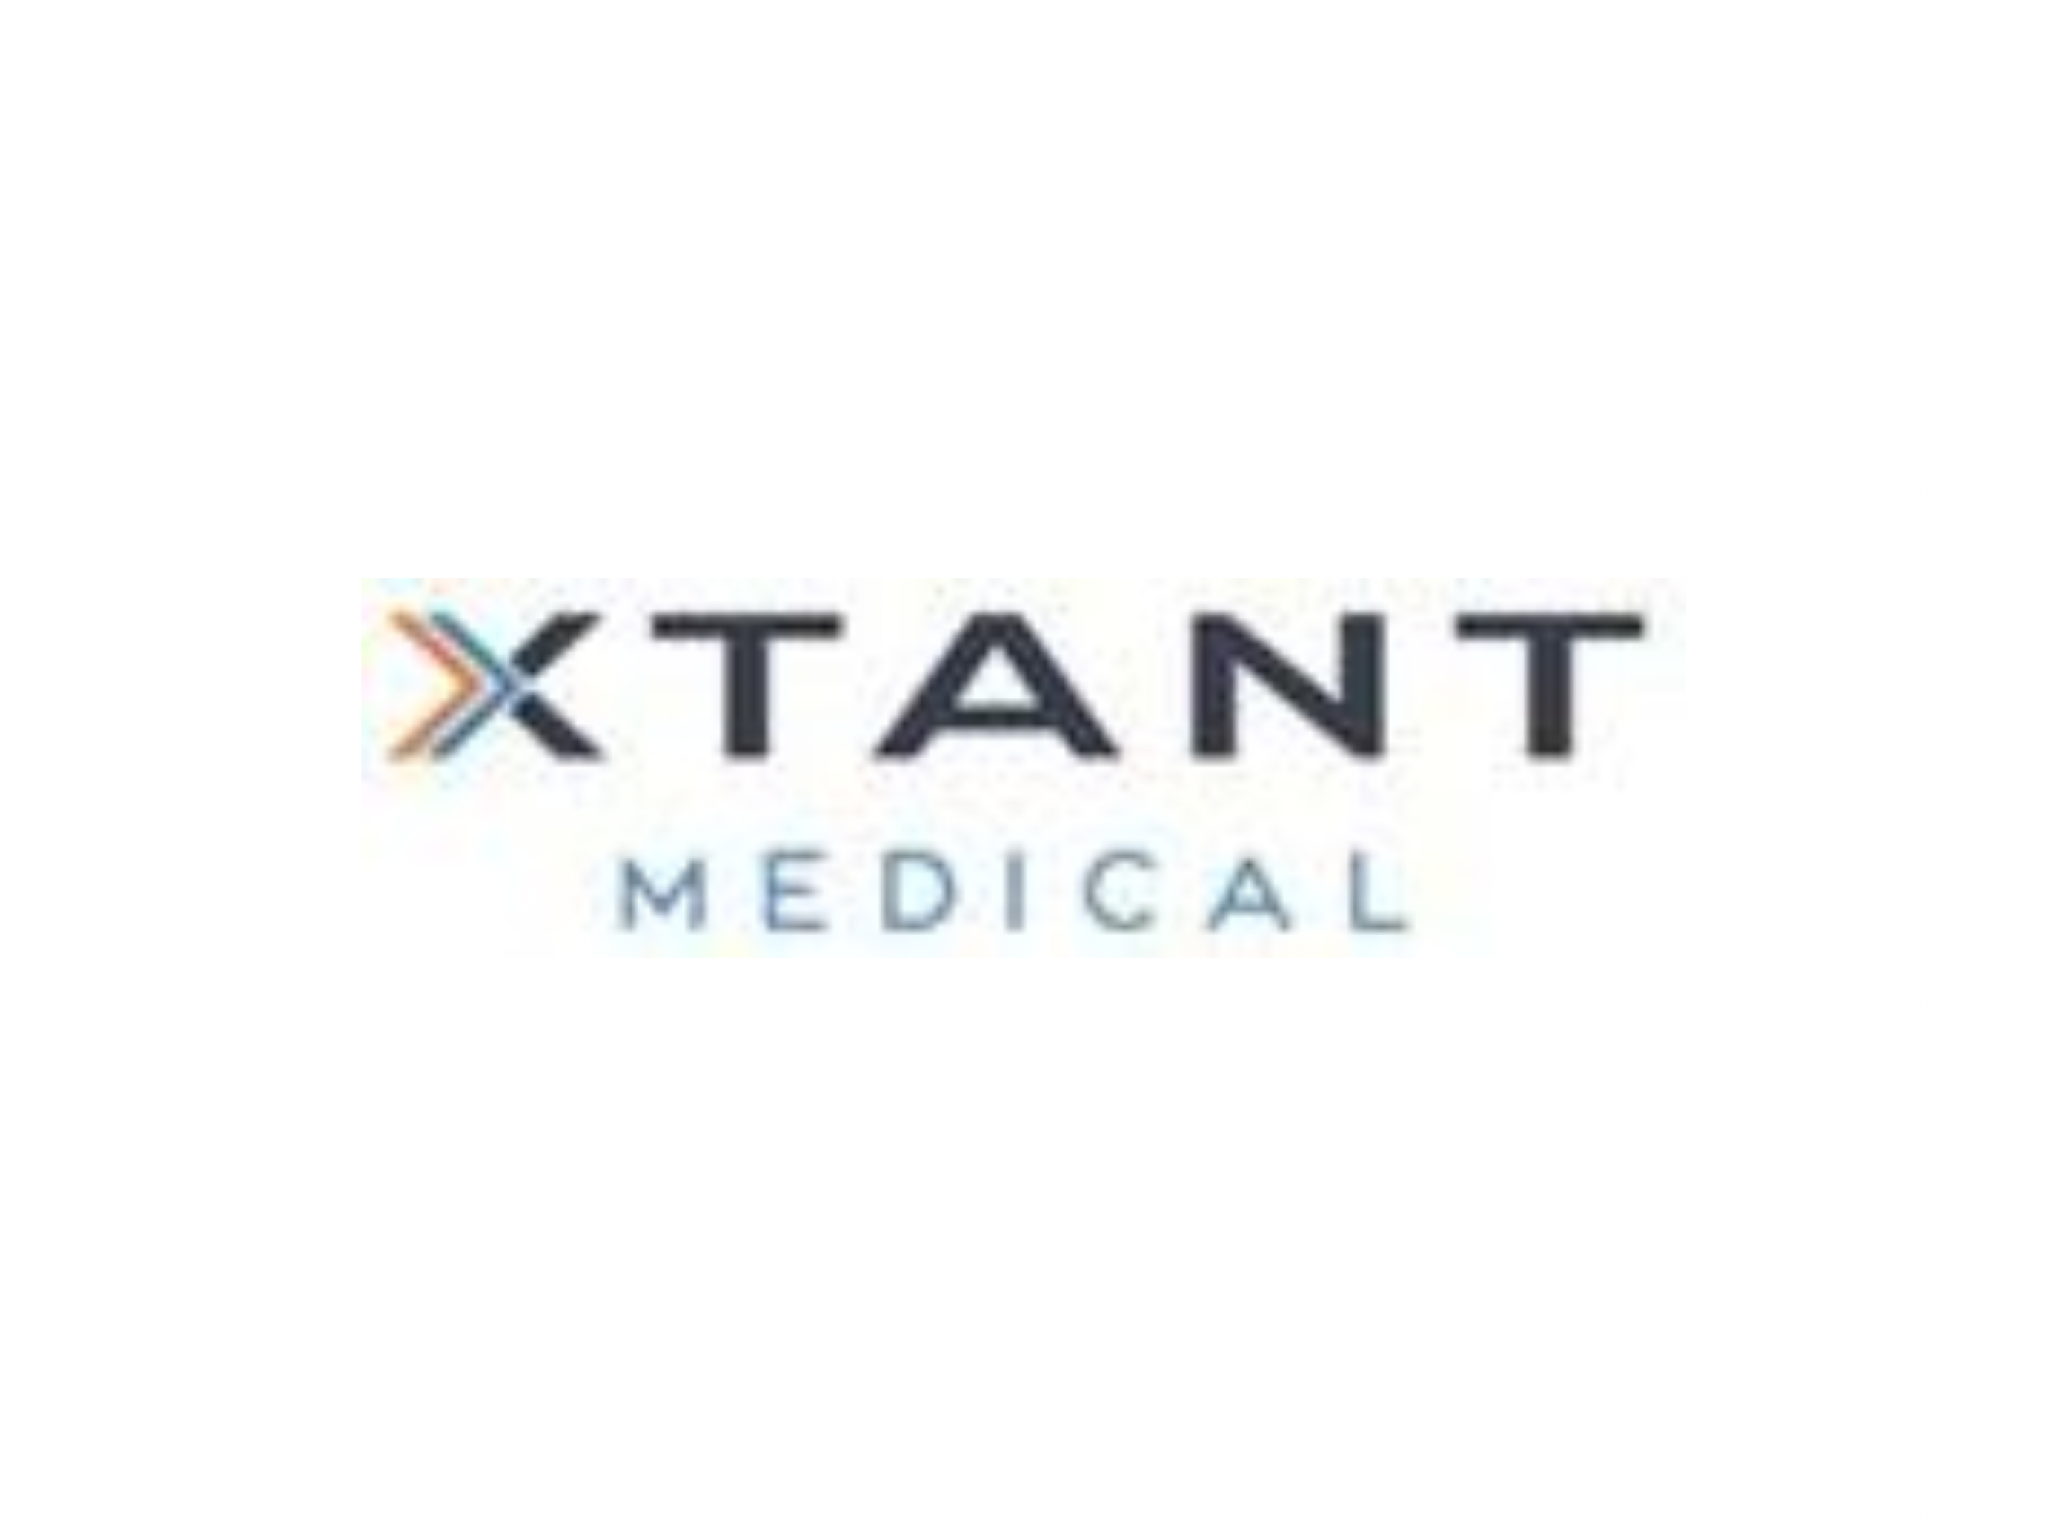  xtant-medical-raises-15m-via-equity-offering 